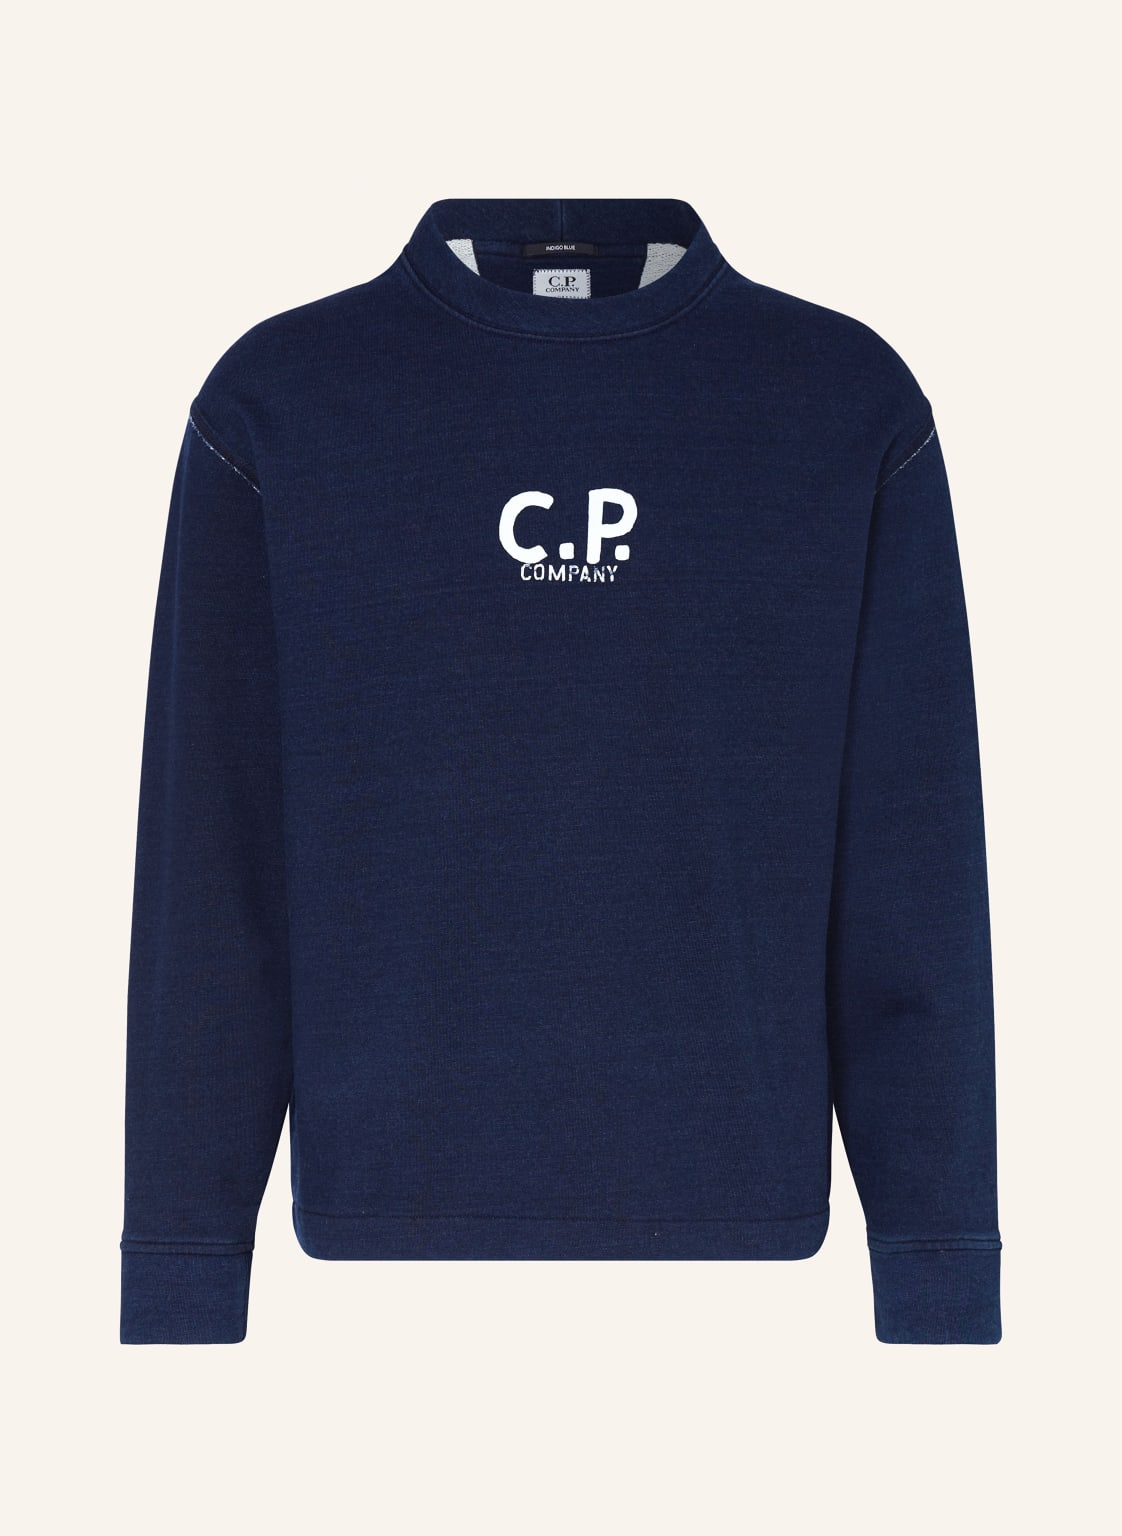 C.P. Company Sweatshirt blau von C.P. Company